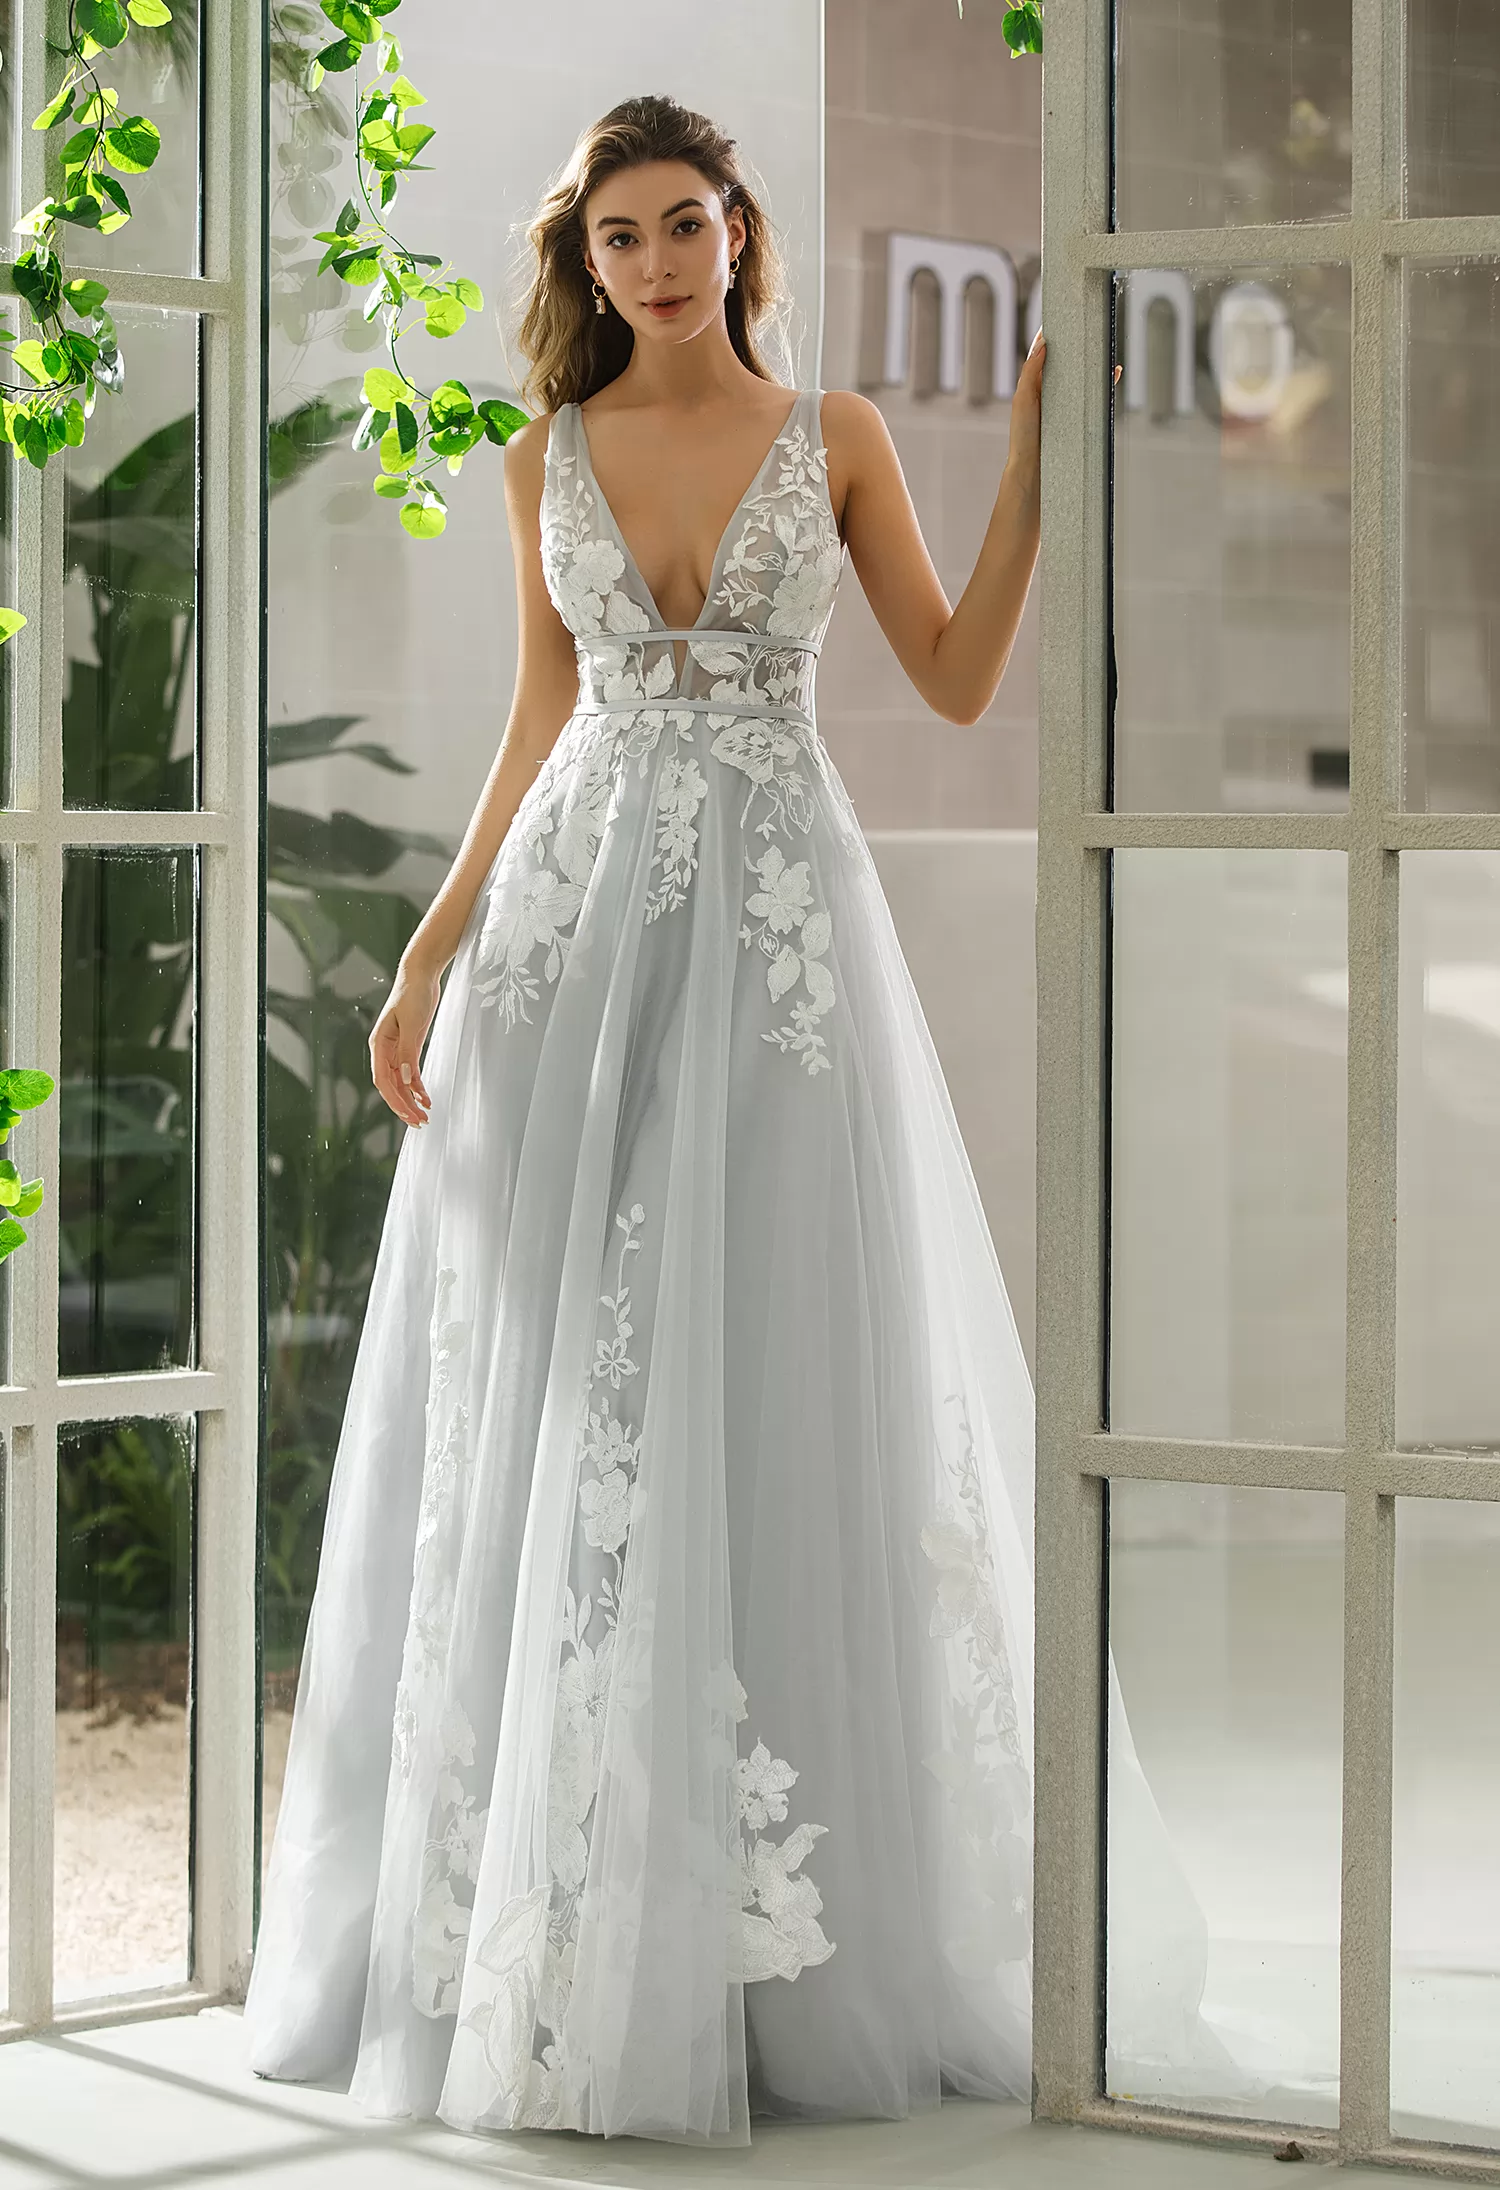 Plunging V-neck Wedding Dress With Floral Motifs